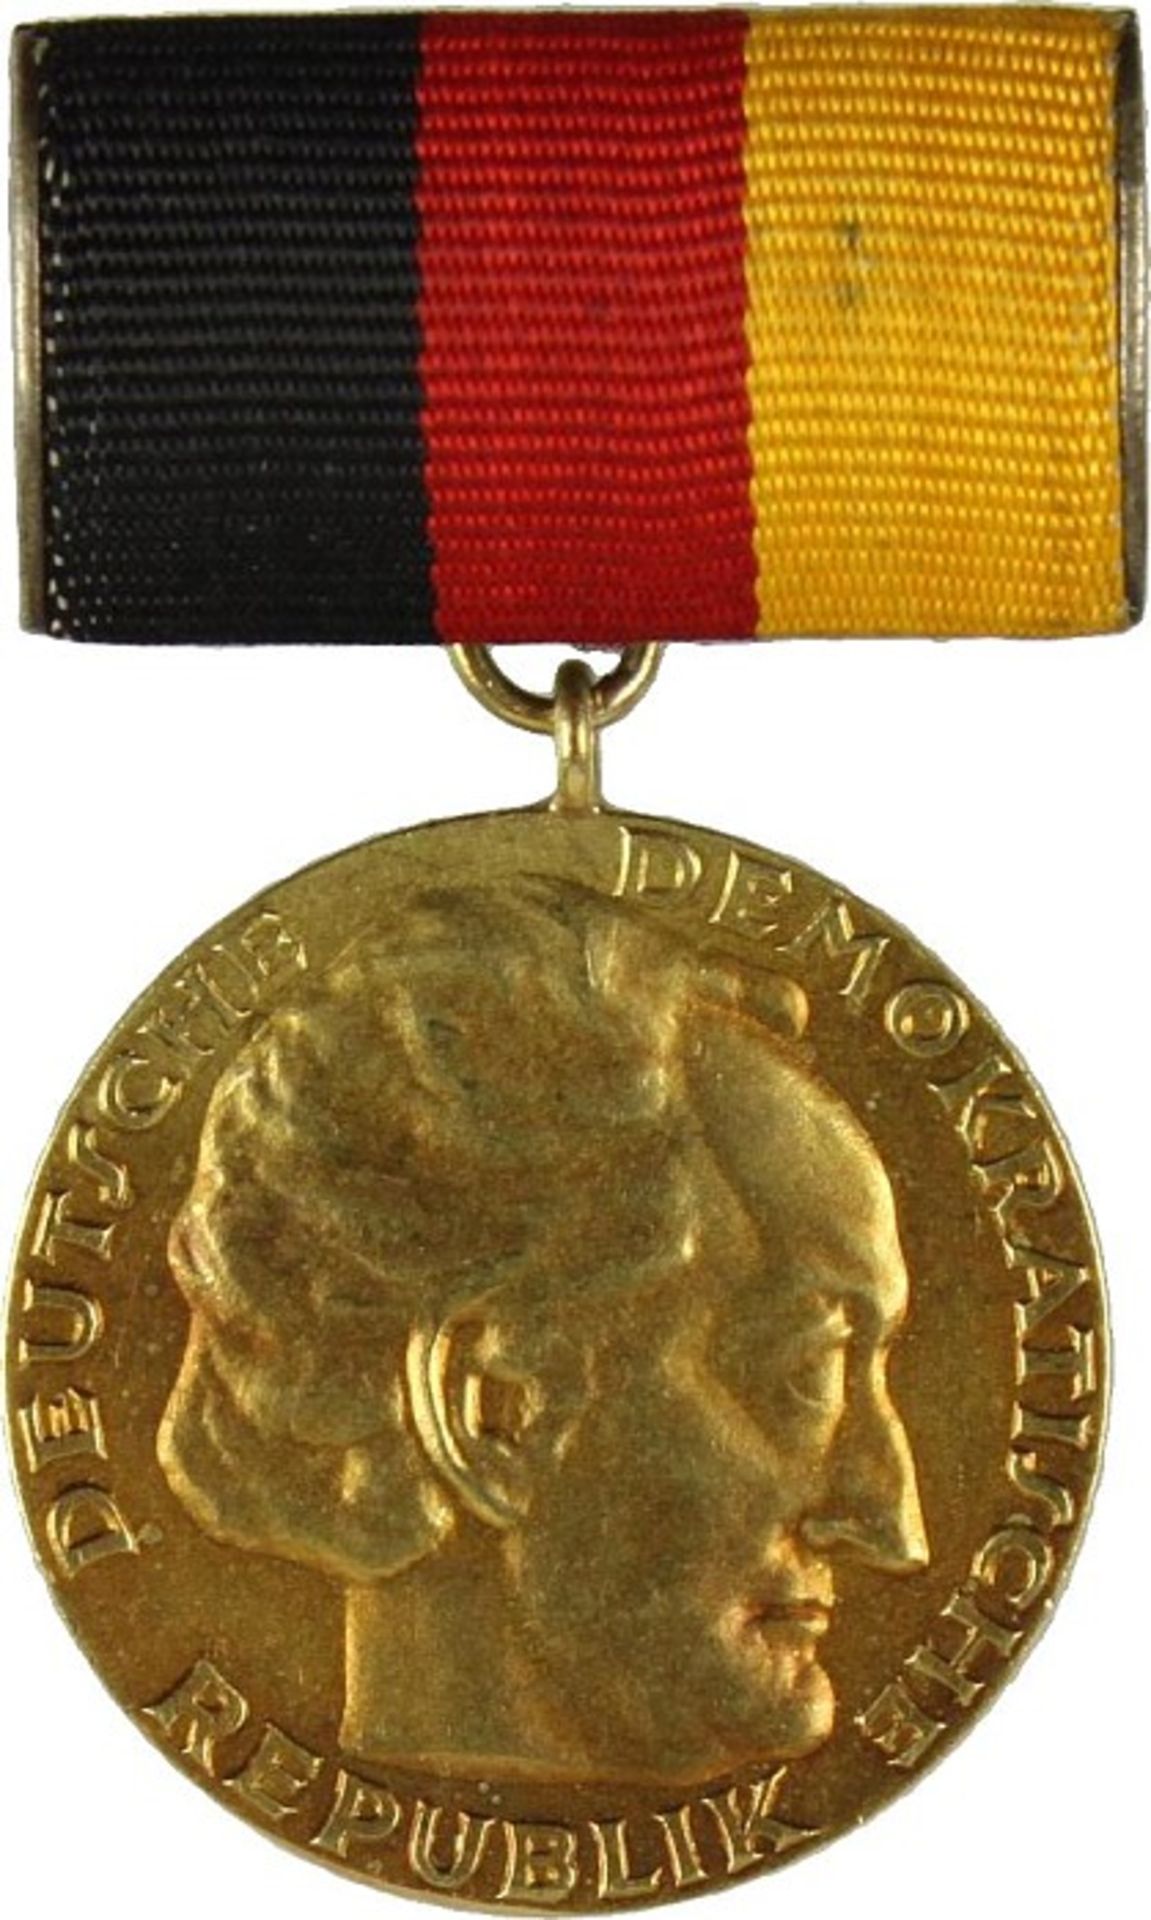 Nationalpreis der DDR 1957, Medaille Gold, erhaben geprägt "750", an Silber vergoldeter